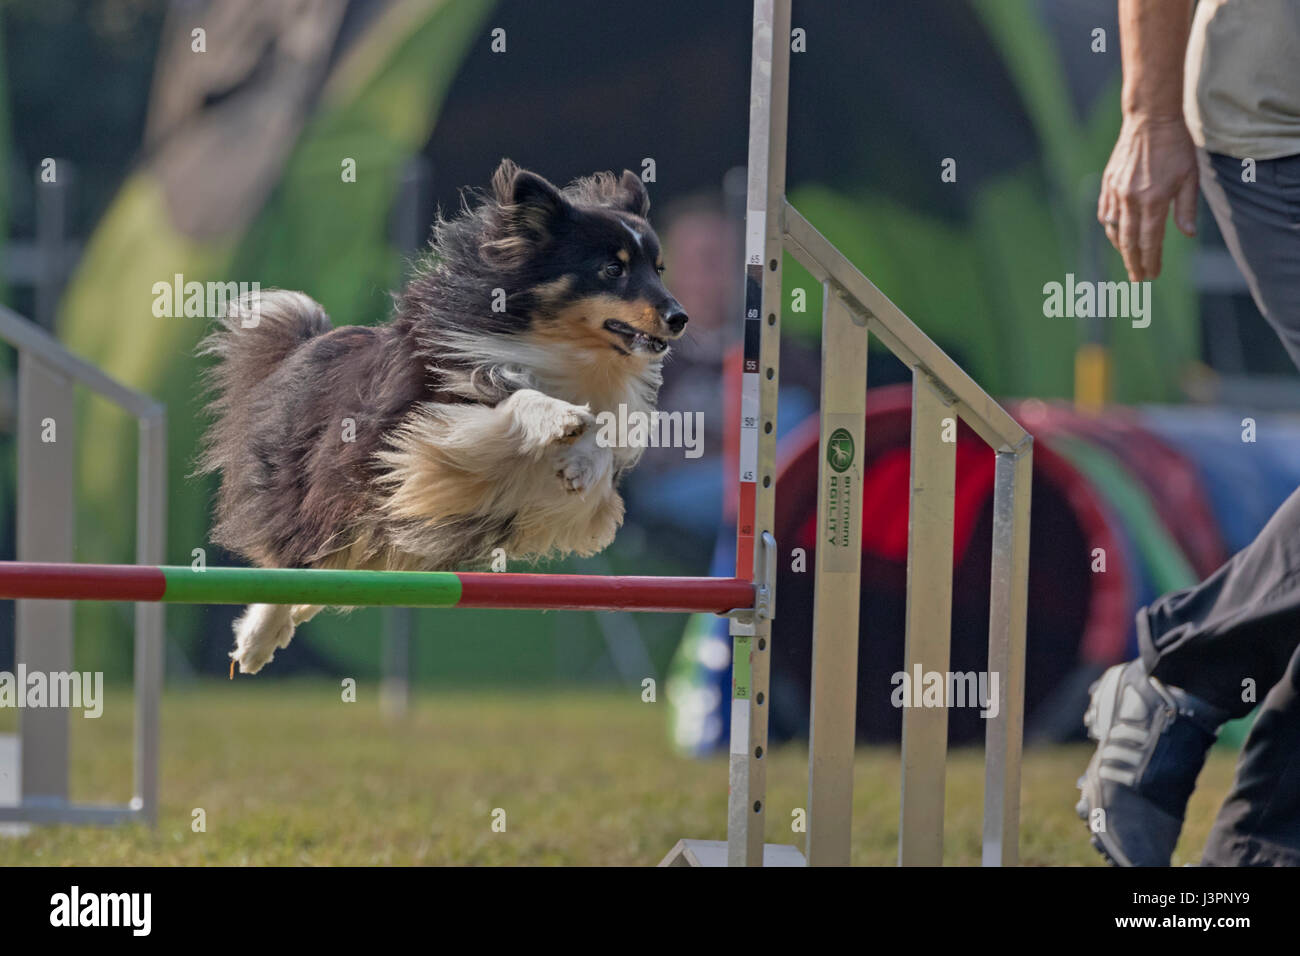 Dog agility 2015 at Hamburg, Germany Stock Photo